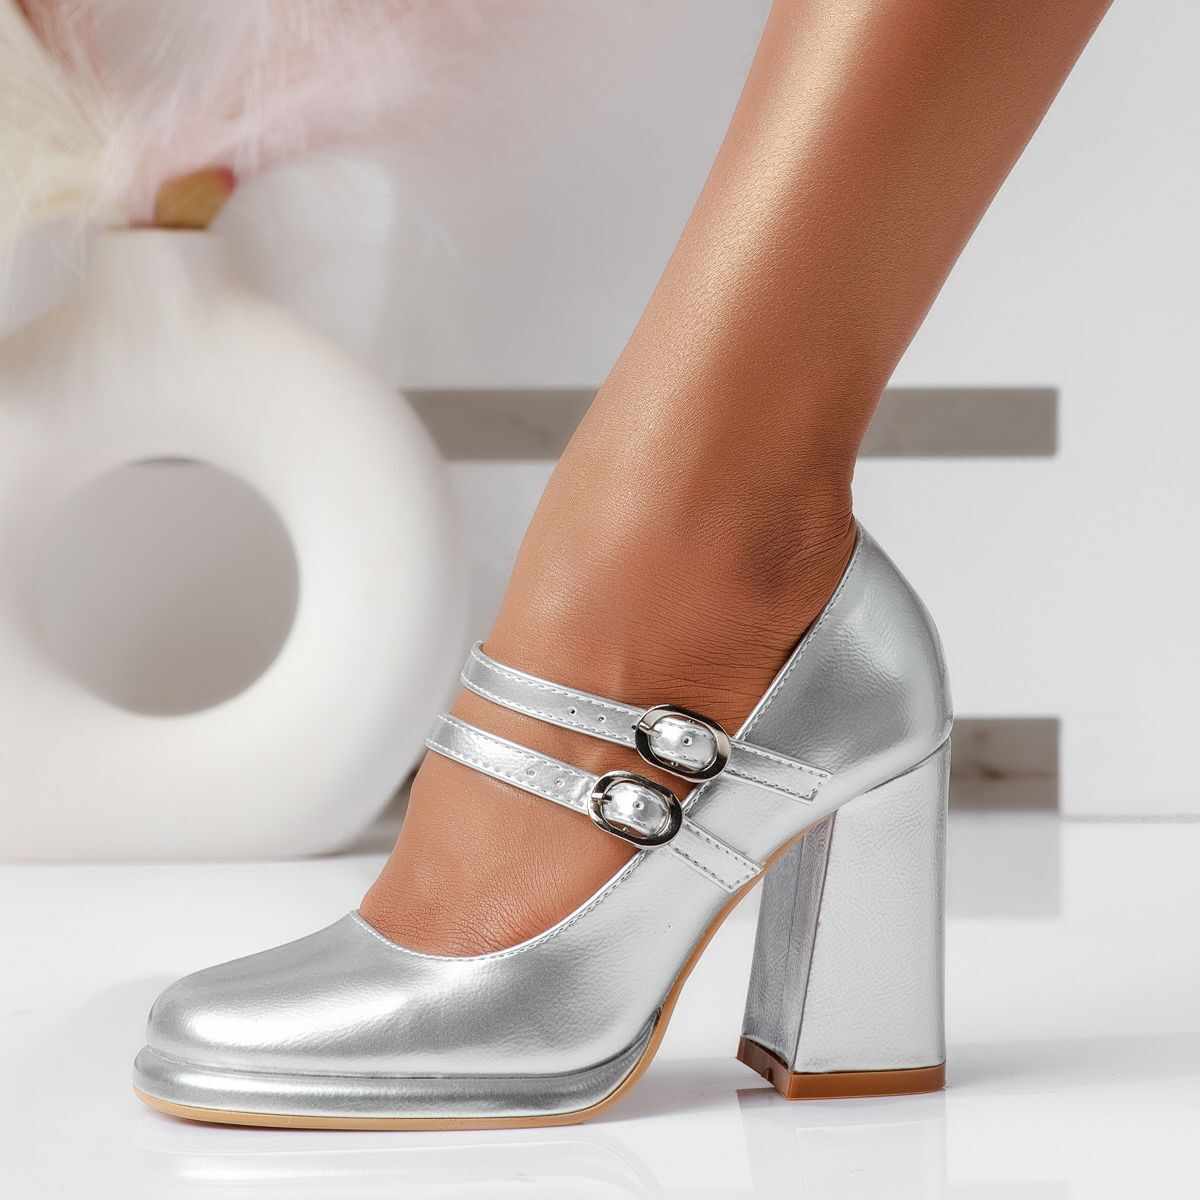 Pantofi Dama cu Toc Eden Argintii #16290